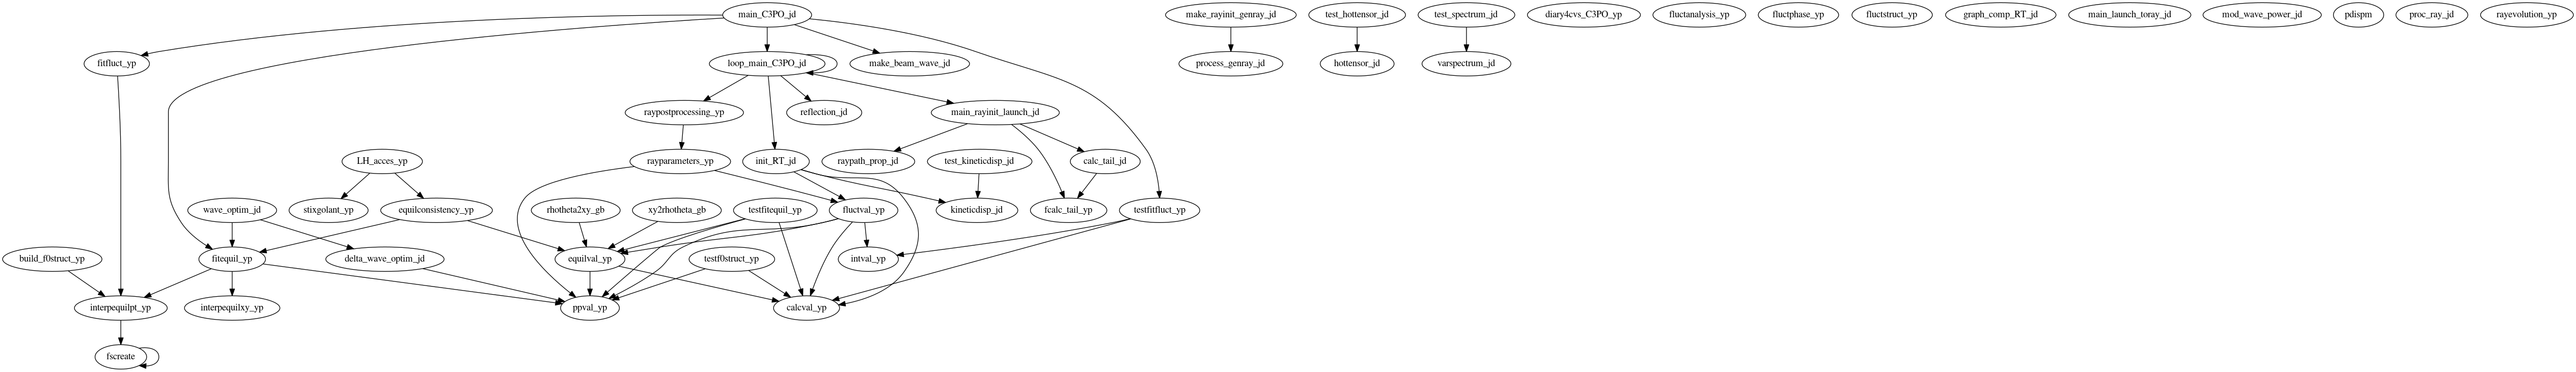 Dependency Graph for LUKE/Project_DKE/Modules/C3PO